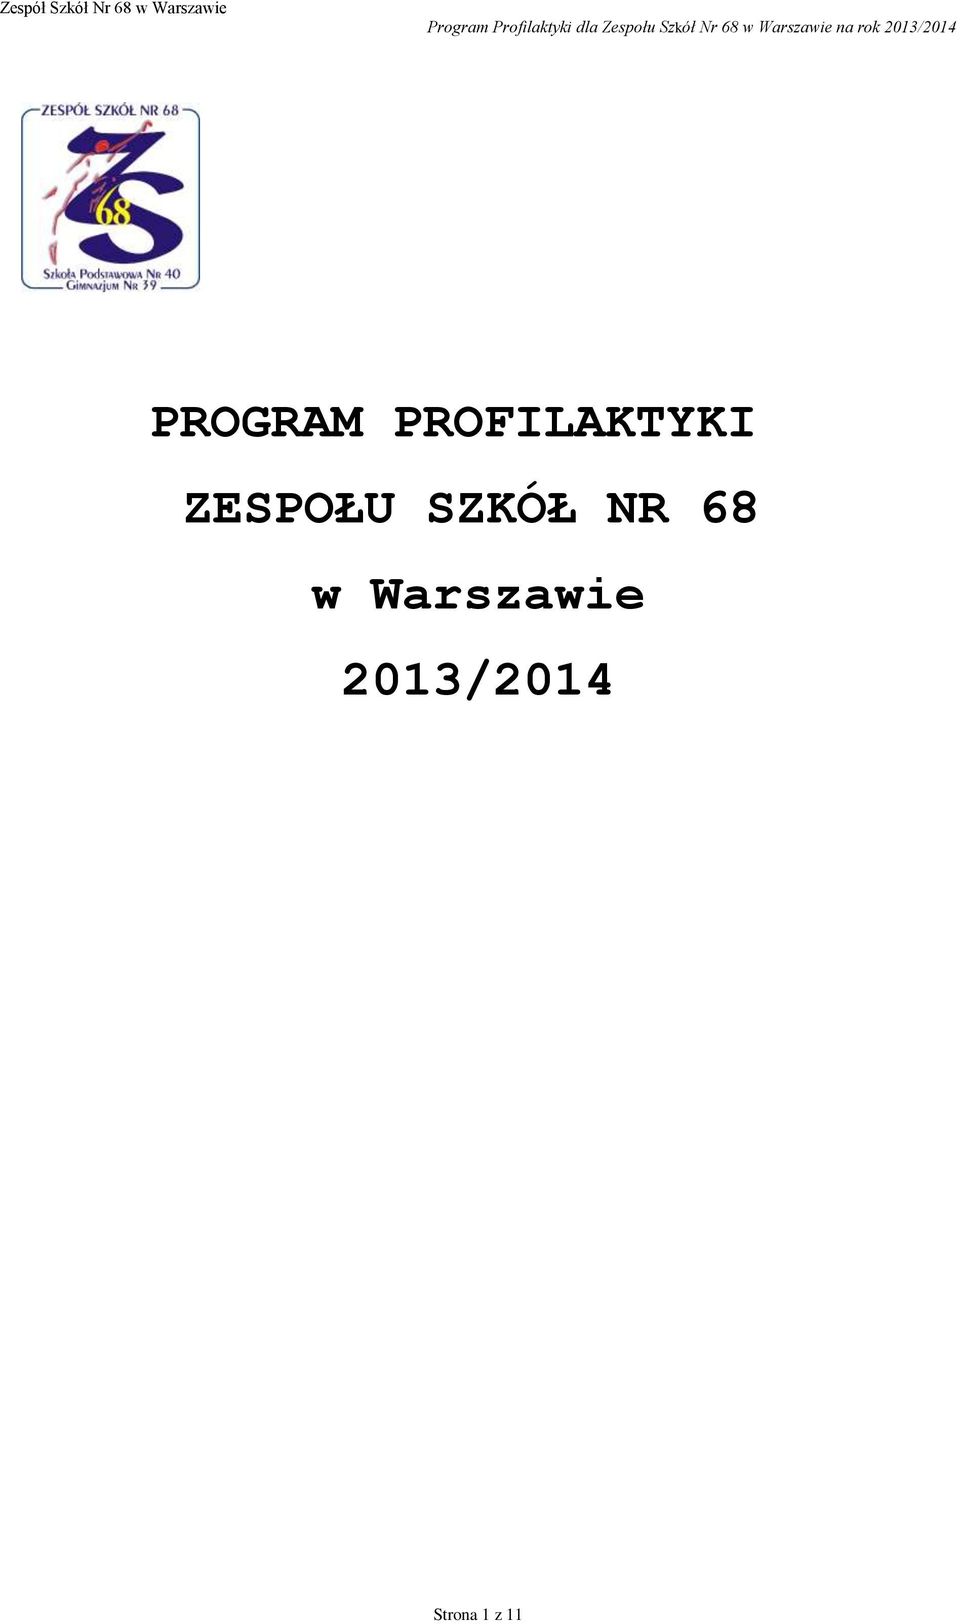 2013/2014 PROGRAM PROFILAKTYKI